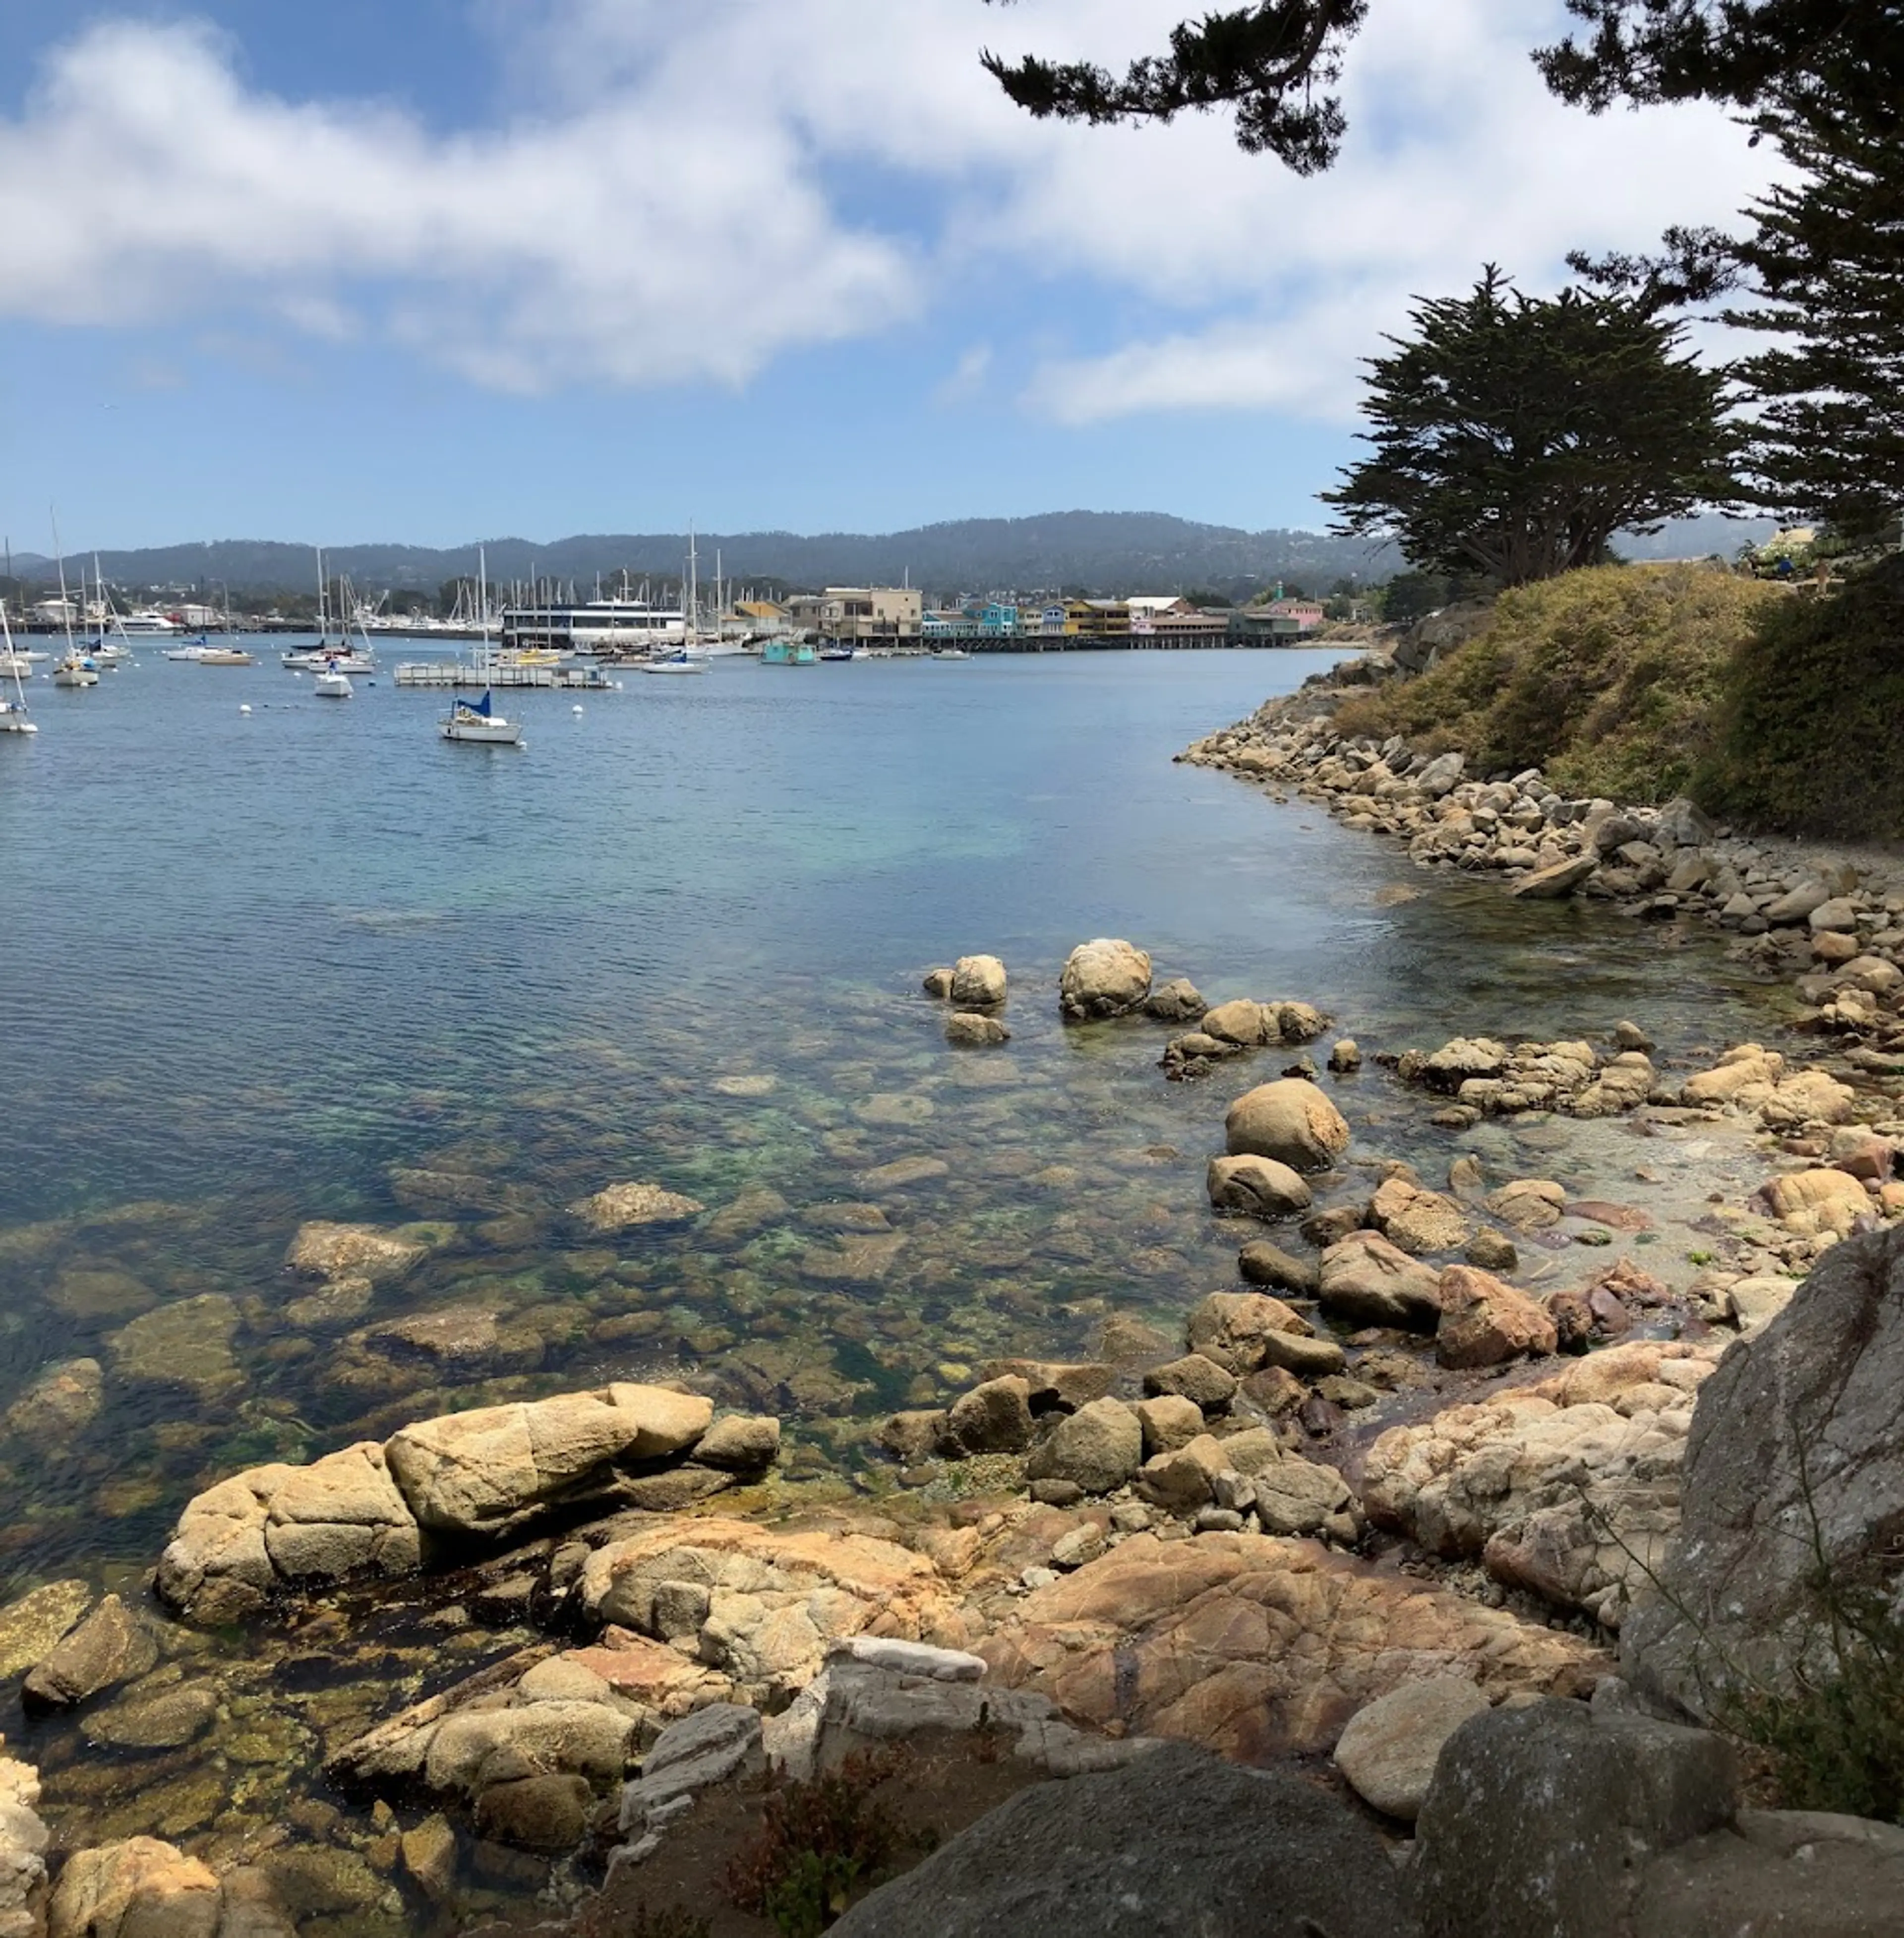 Monterey Bay Coastal Recreation Trail